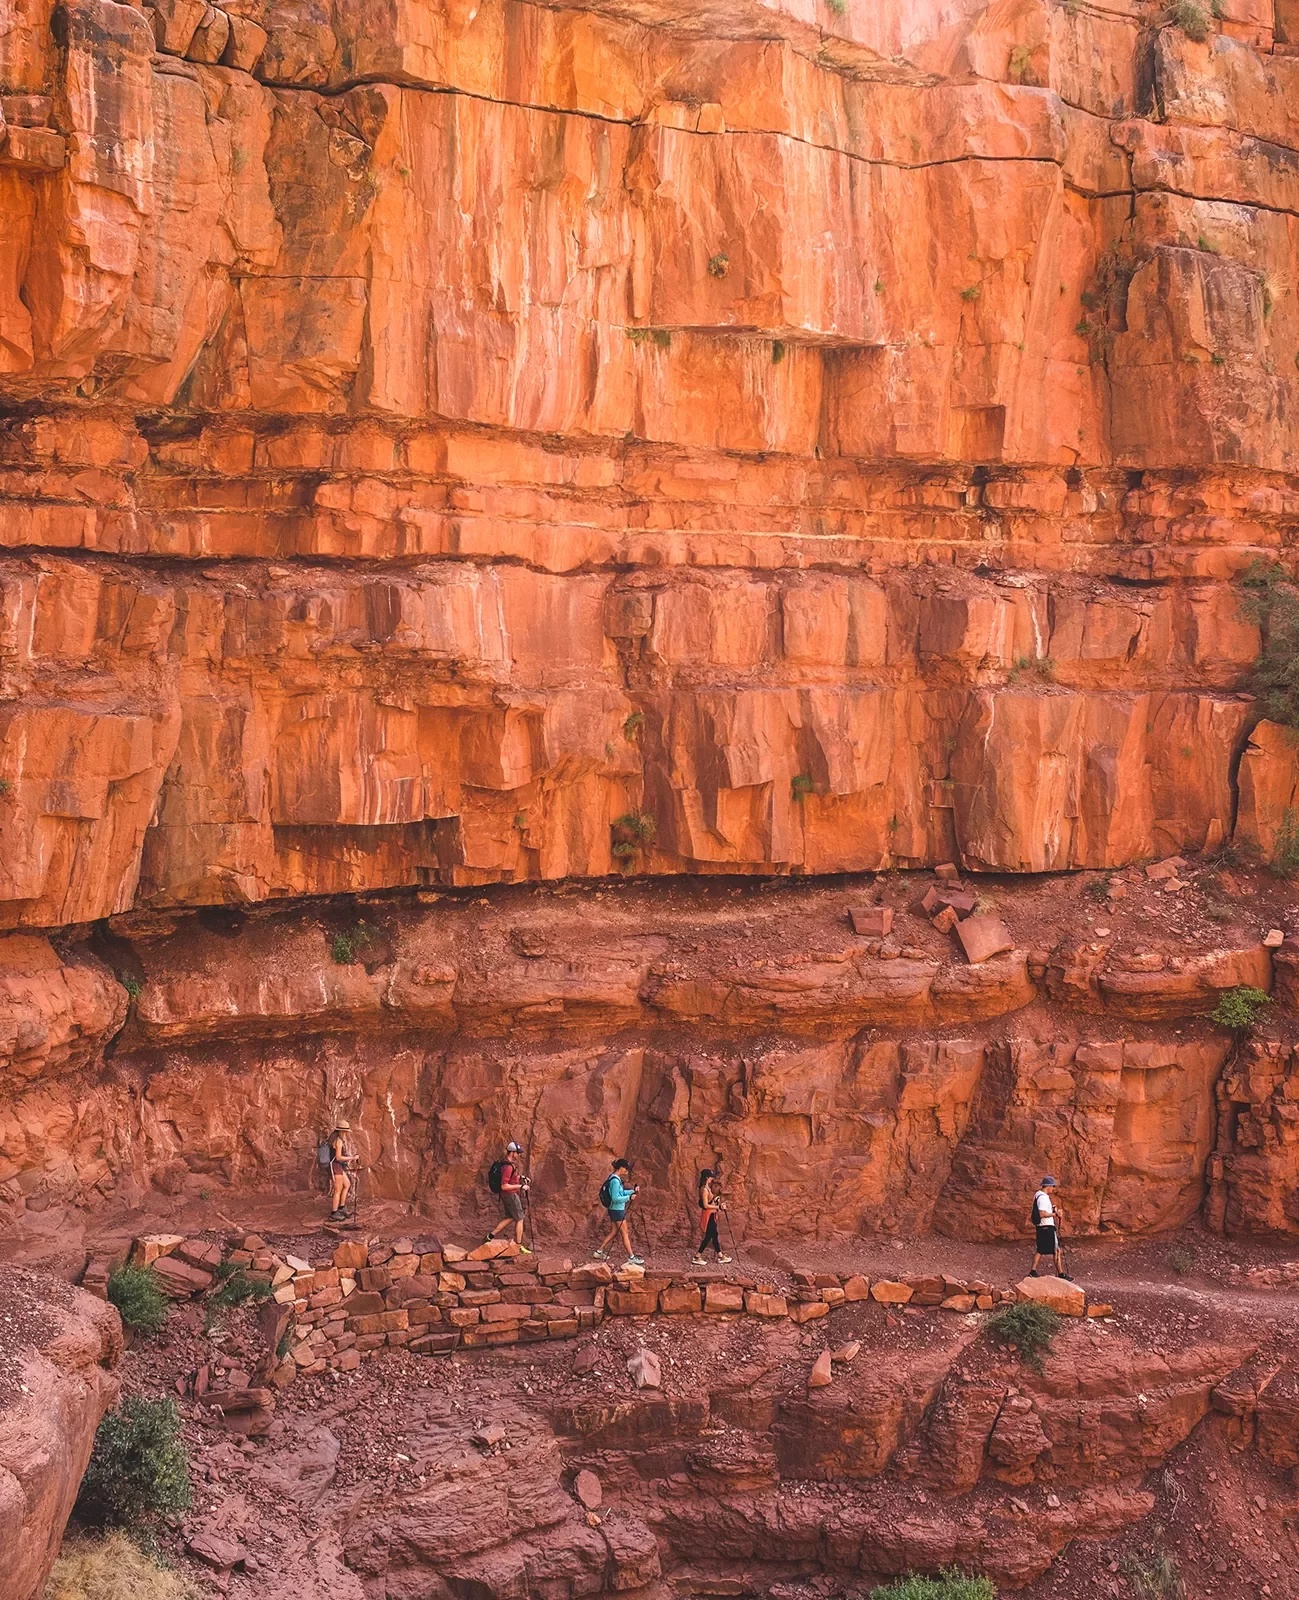 Five guests on cliffside trail, large orange rock face above them.